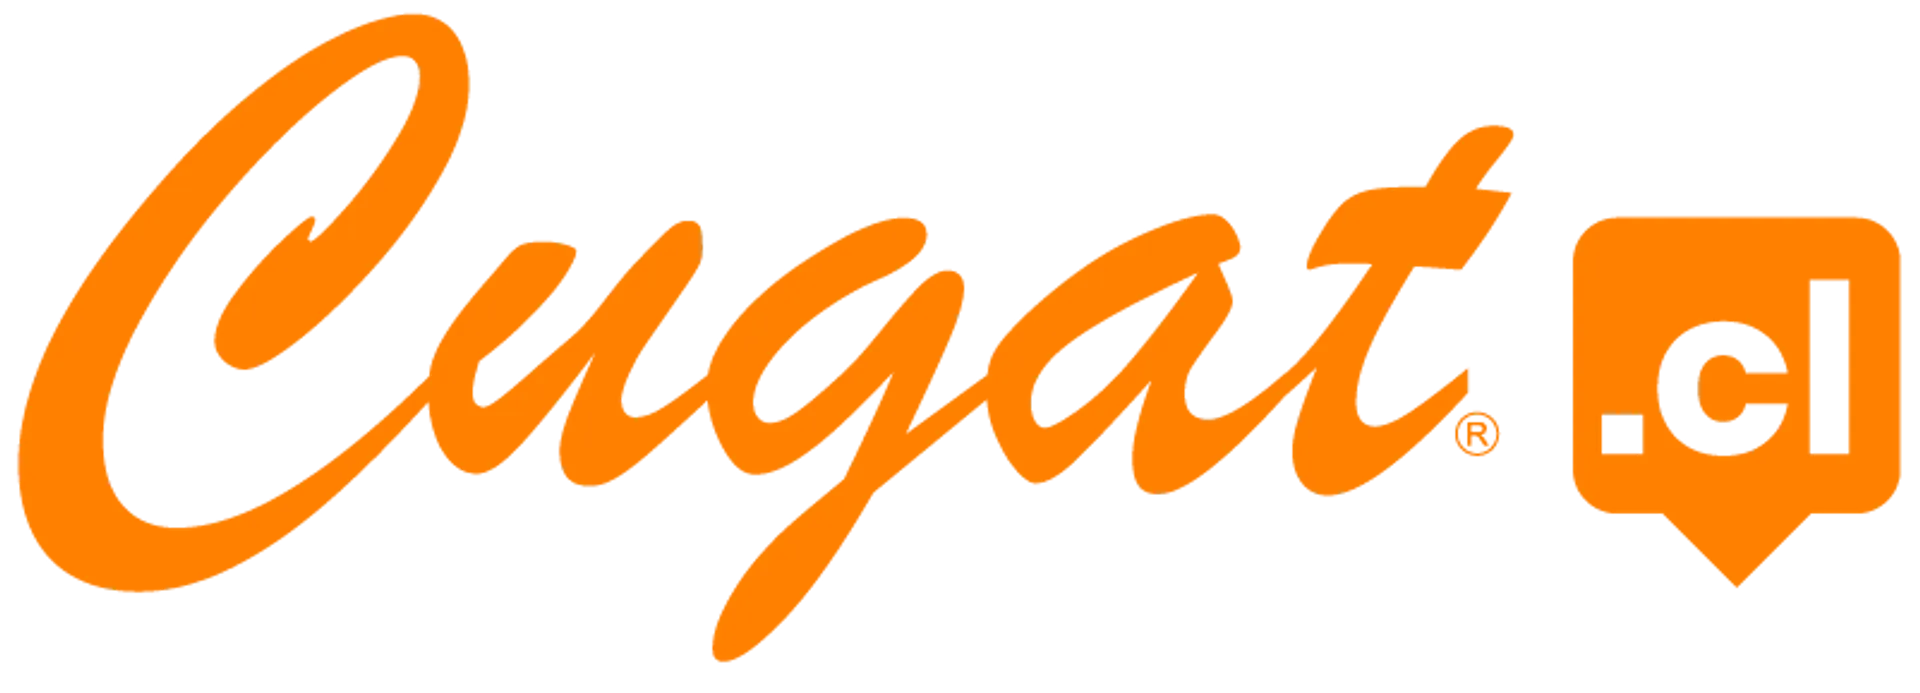 CUGAT logo